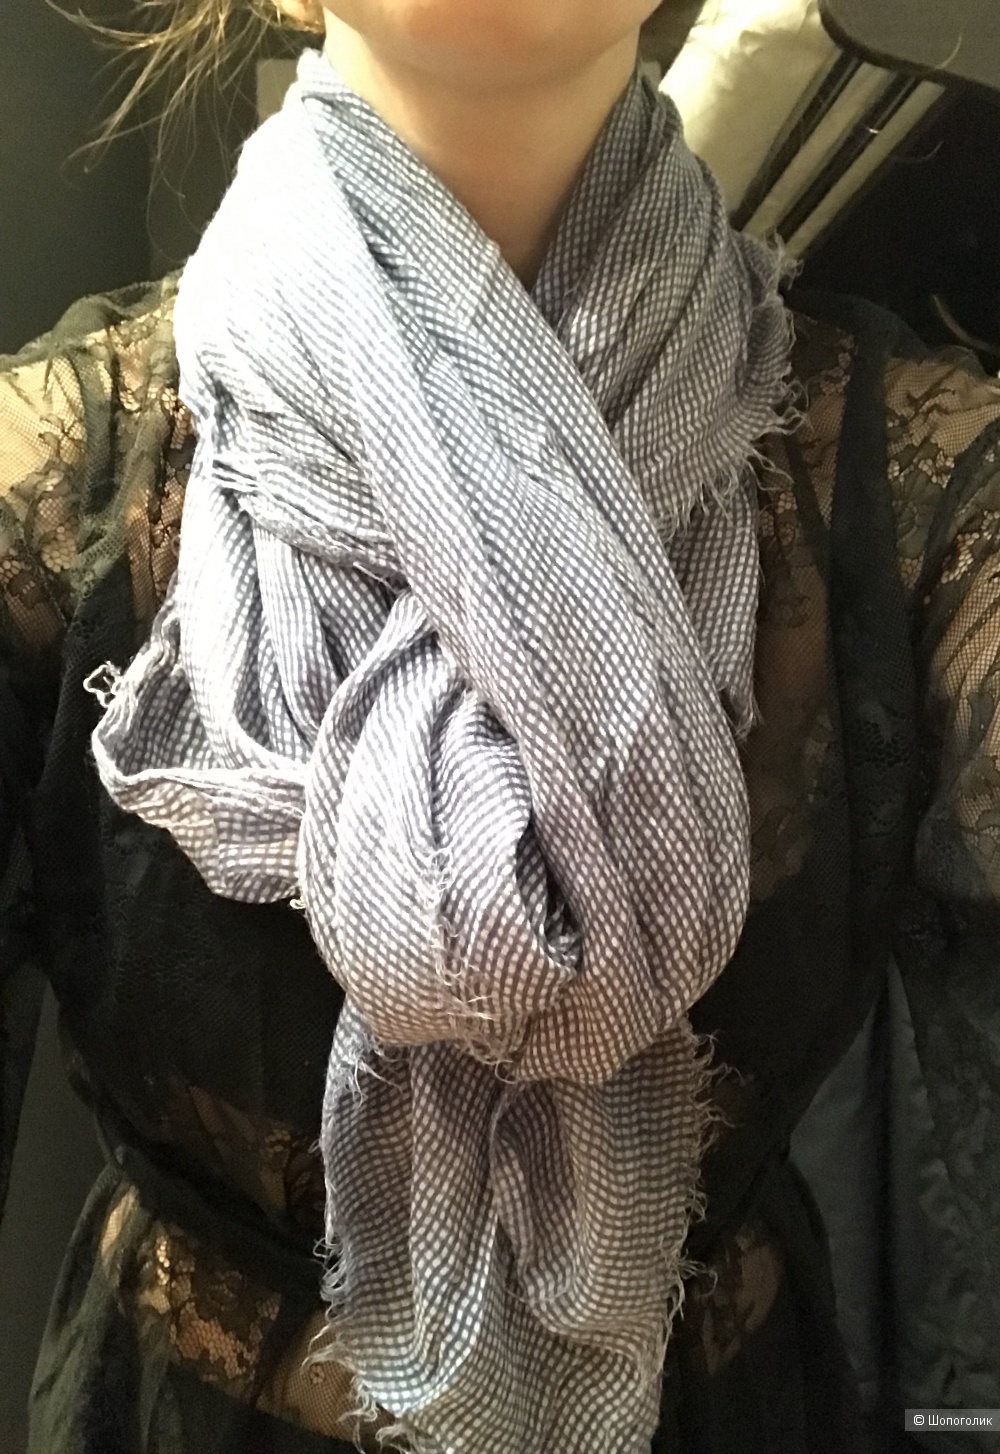 Комплект 2 шарфа-платка Massimo Dutti,one size